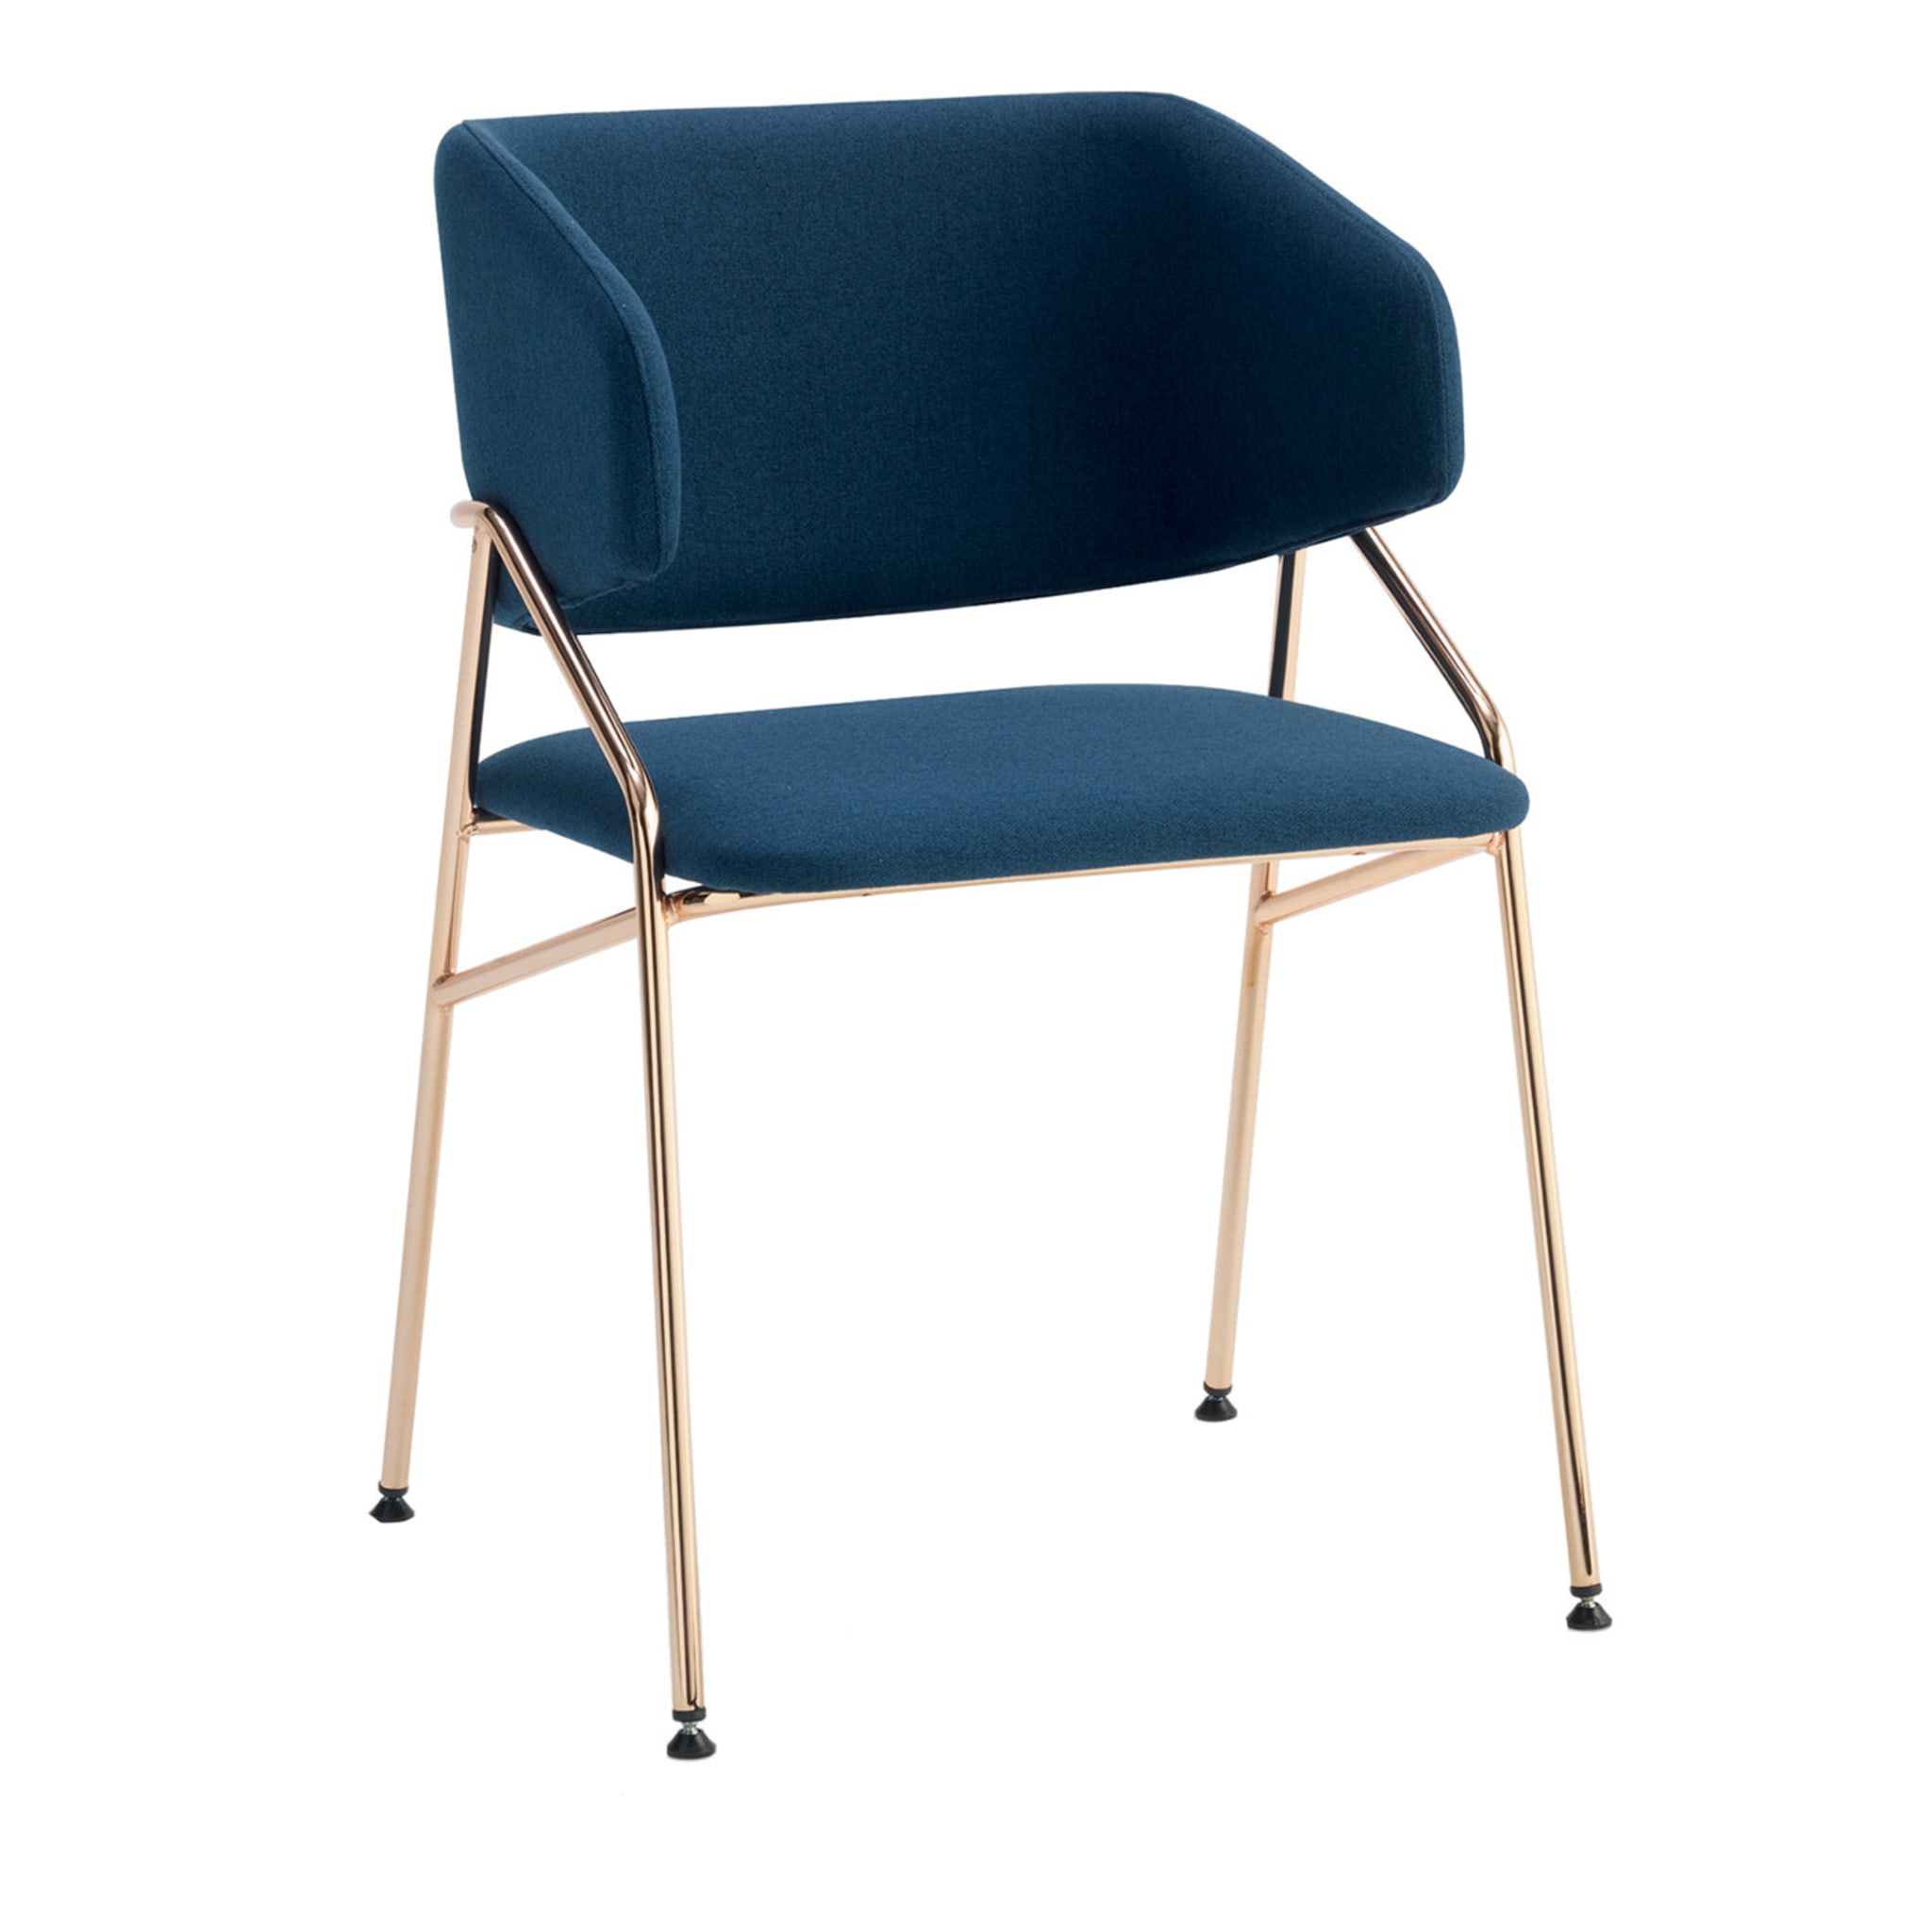 Set of 4 Ebony Royal Blue Chairs - Main view